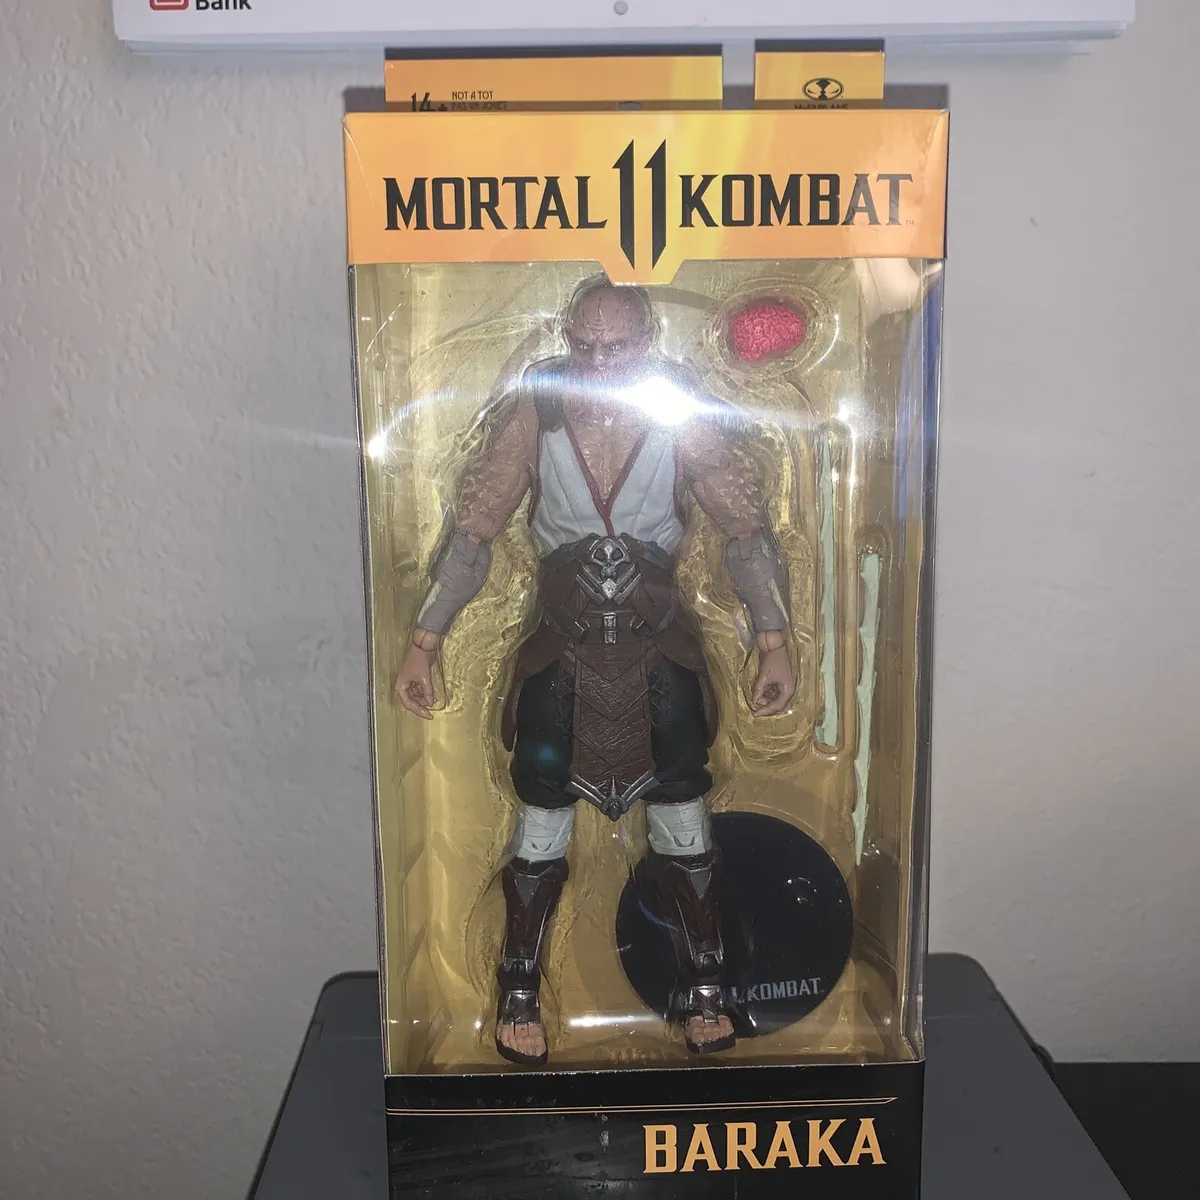  McFarlane Toys Mortal Kombat Baraka Action Figure